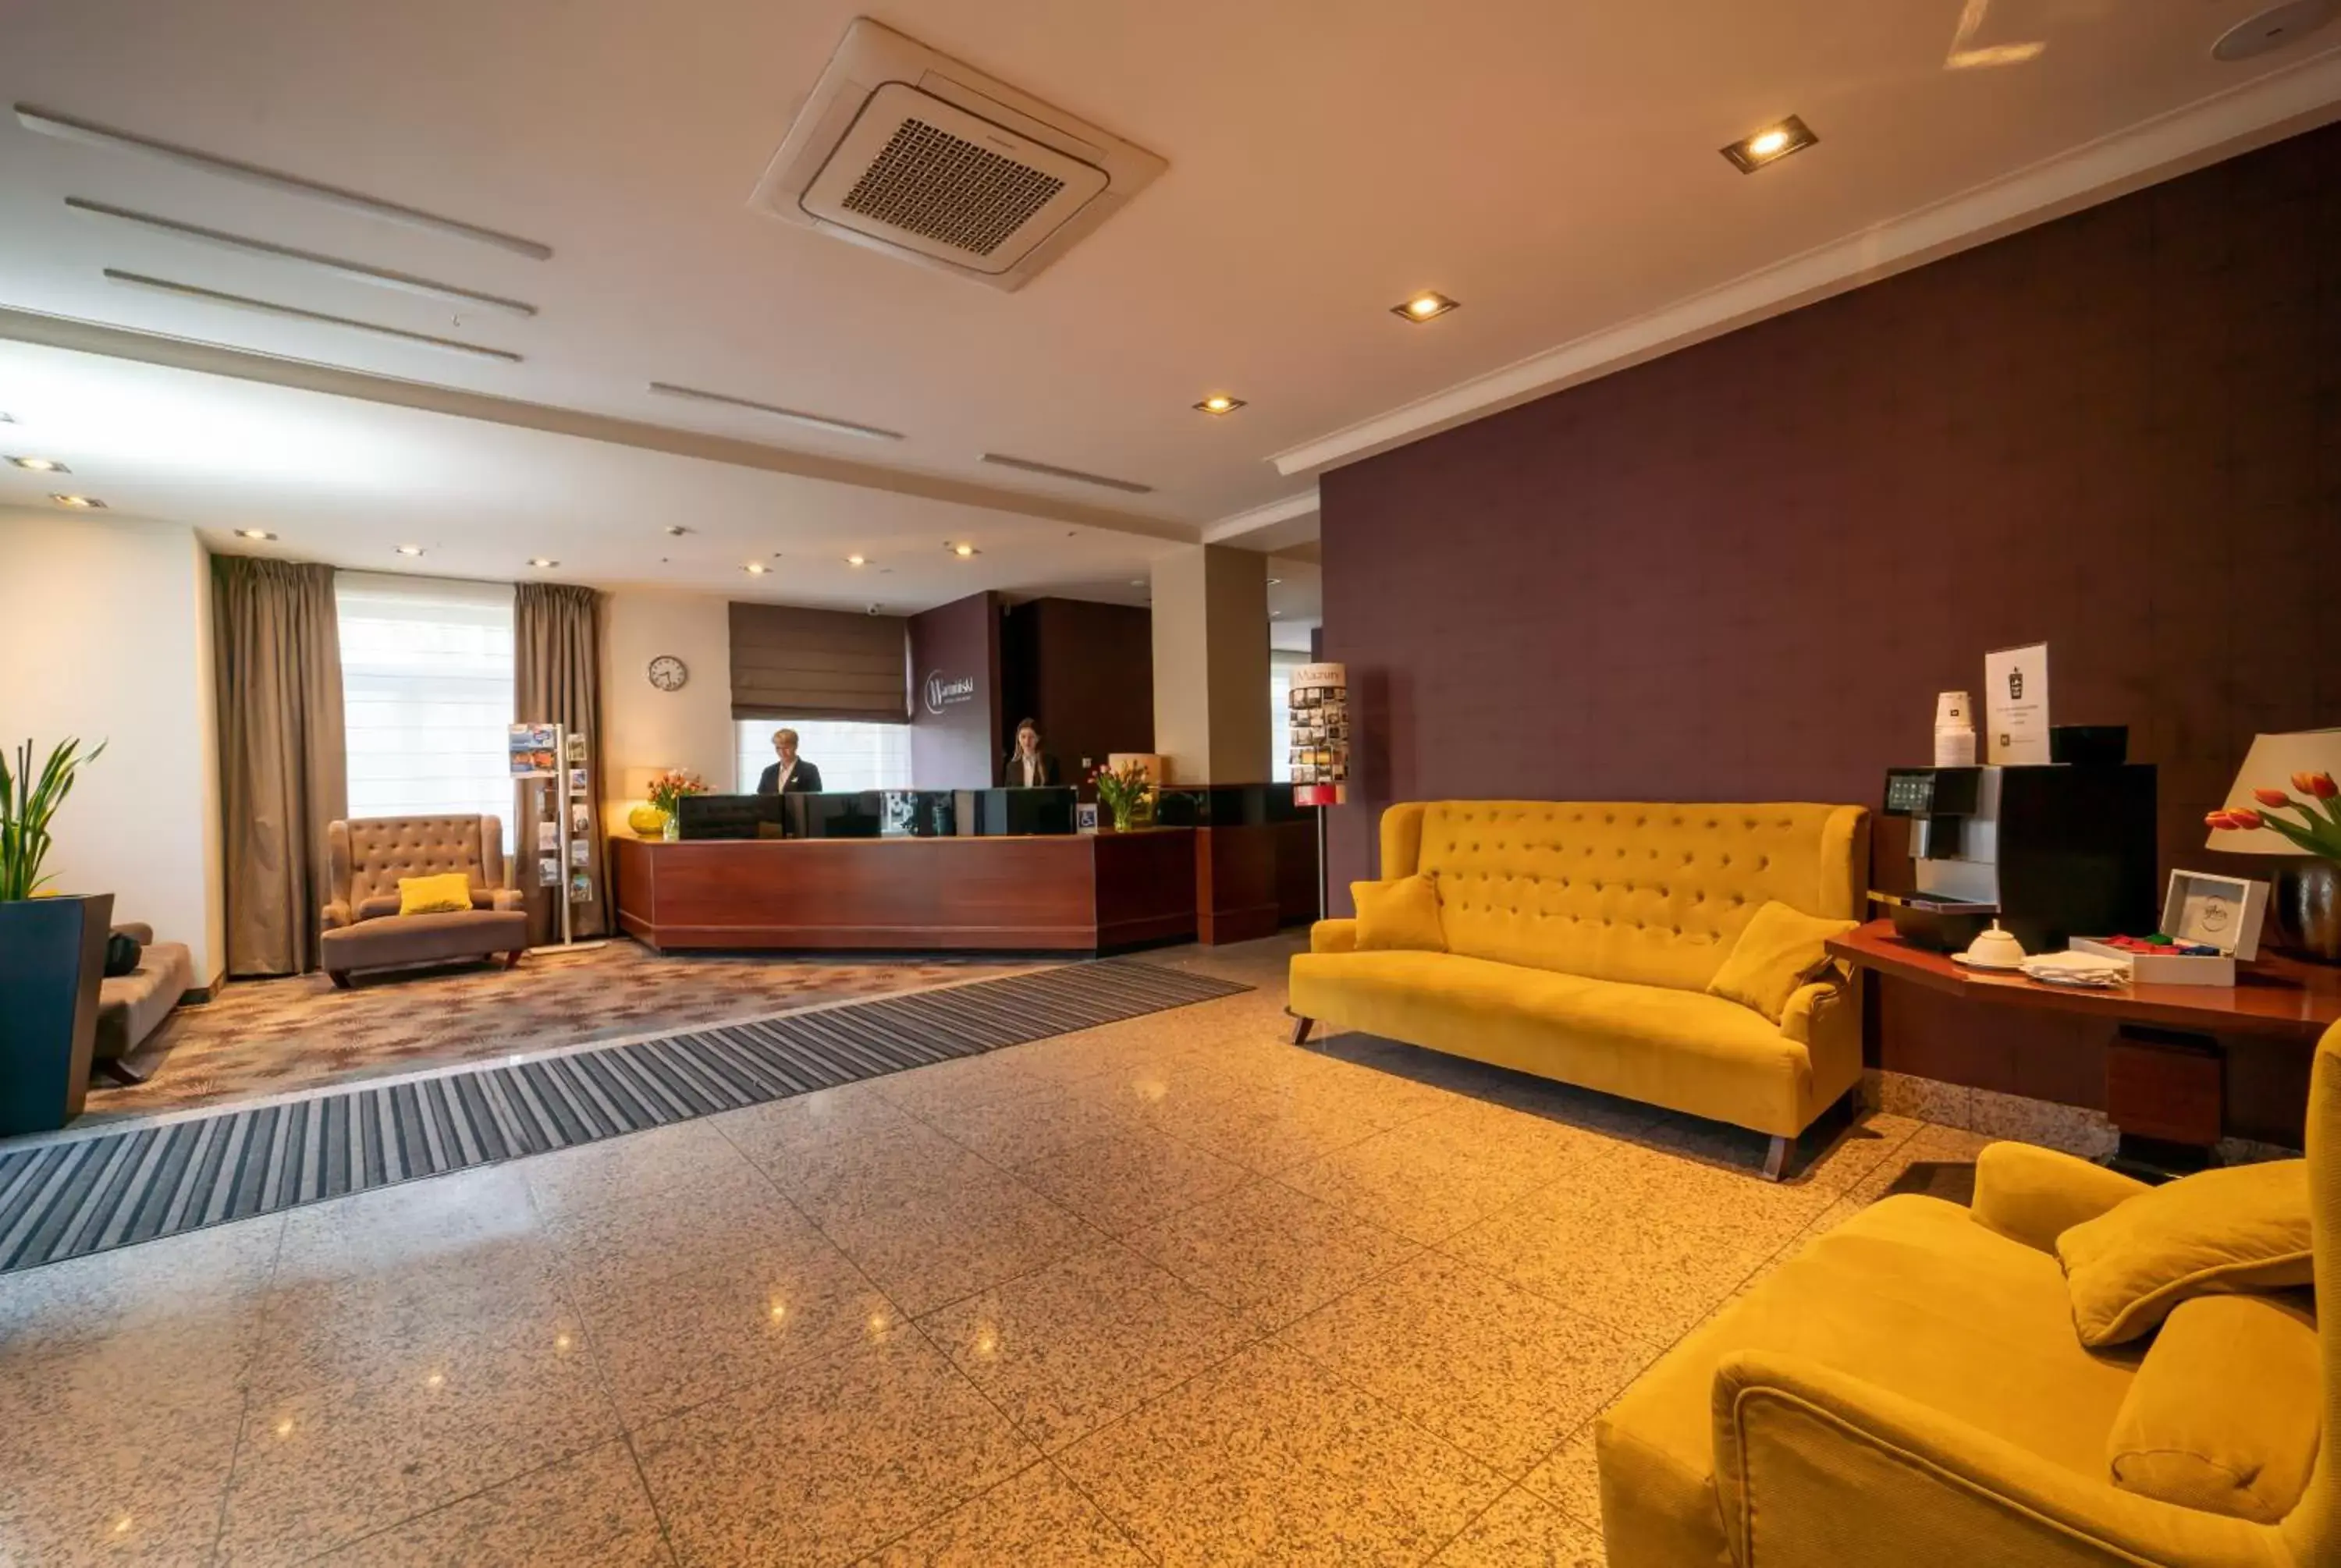 Lobby or reception, Lobby/Reception in Warmiński Hotel & Conference